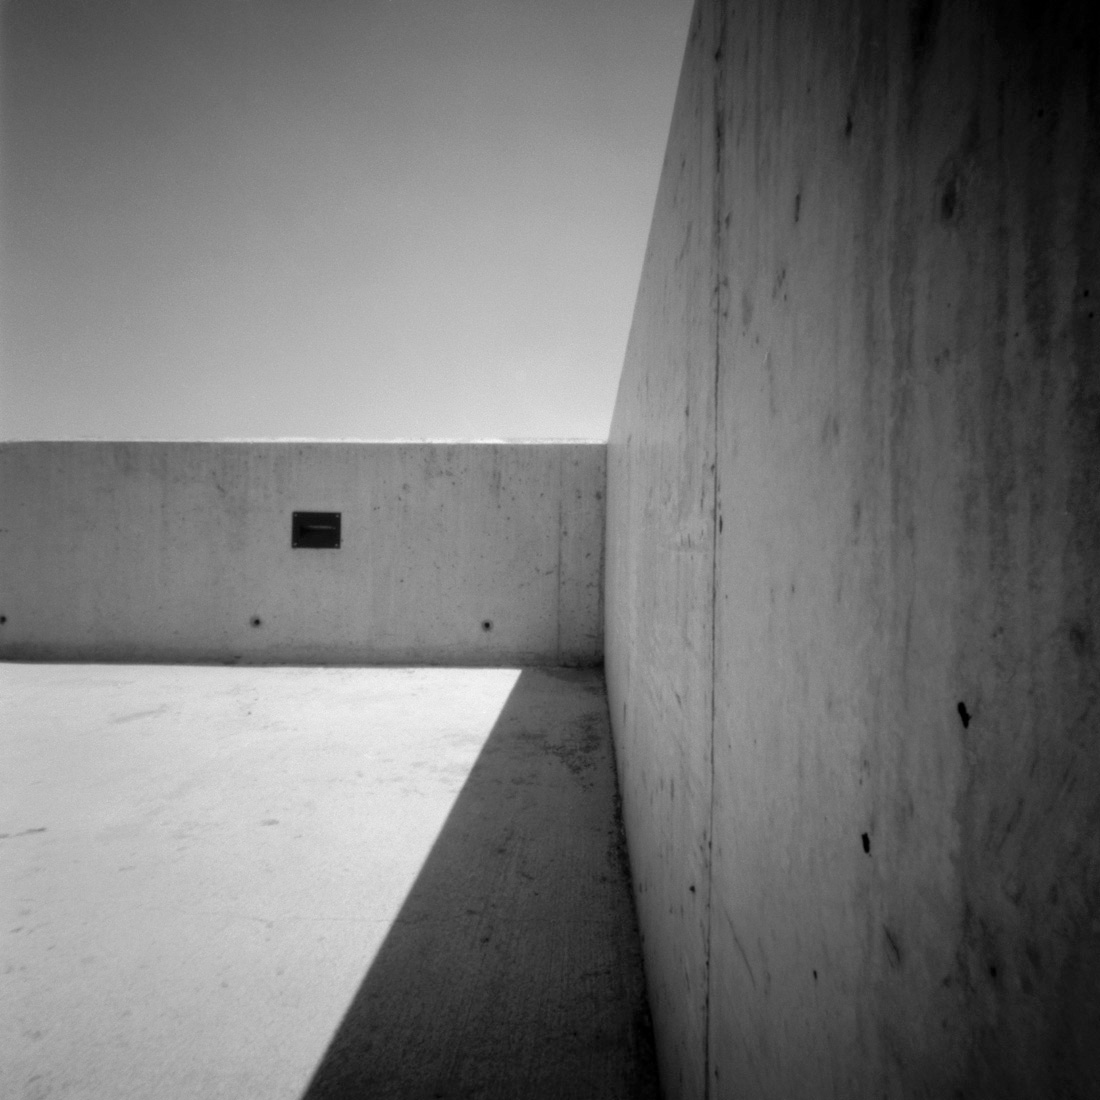 shadows on concrete